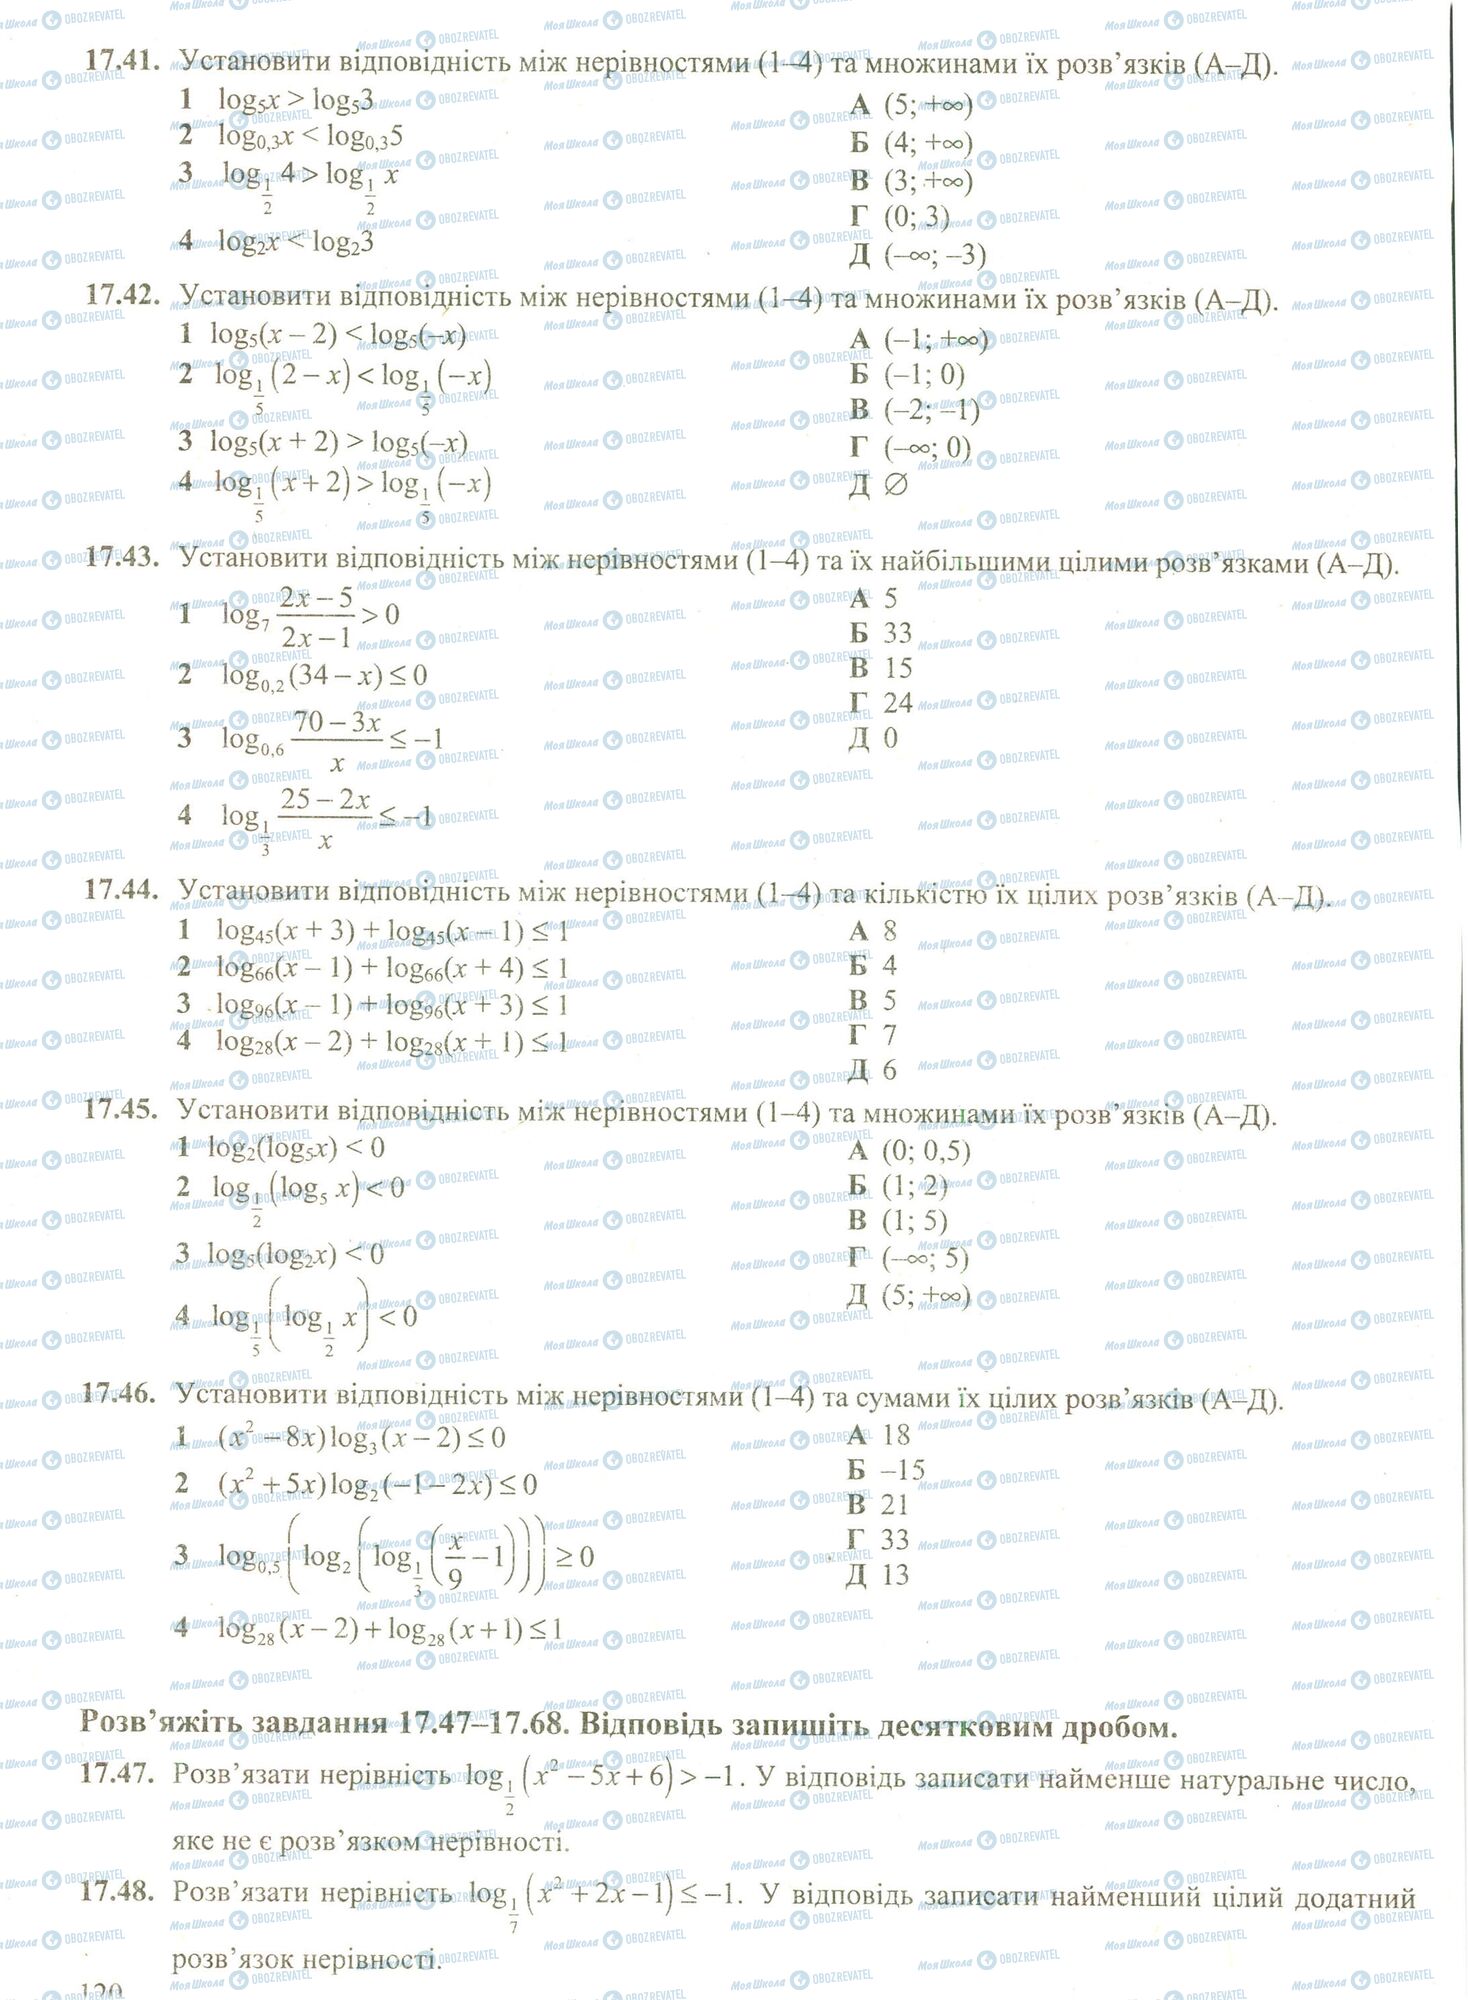 ЗНО Математика 11 класс страница 41-48